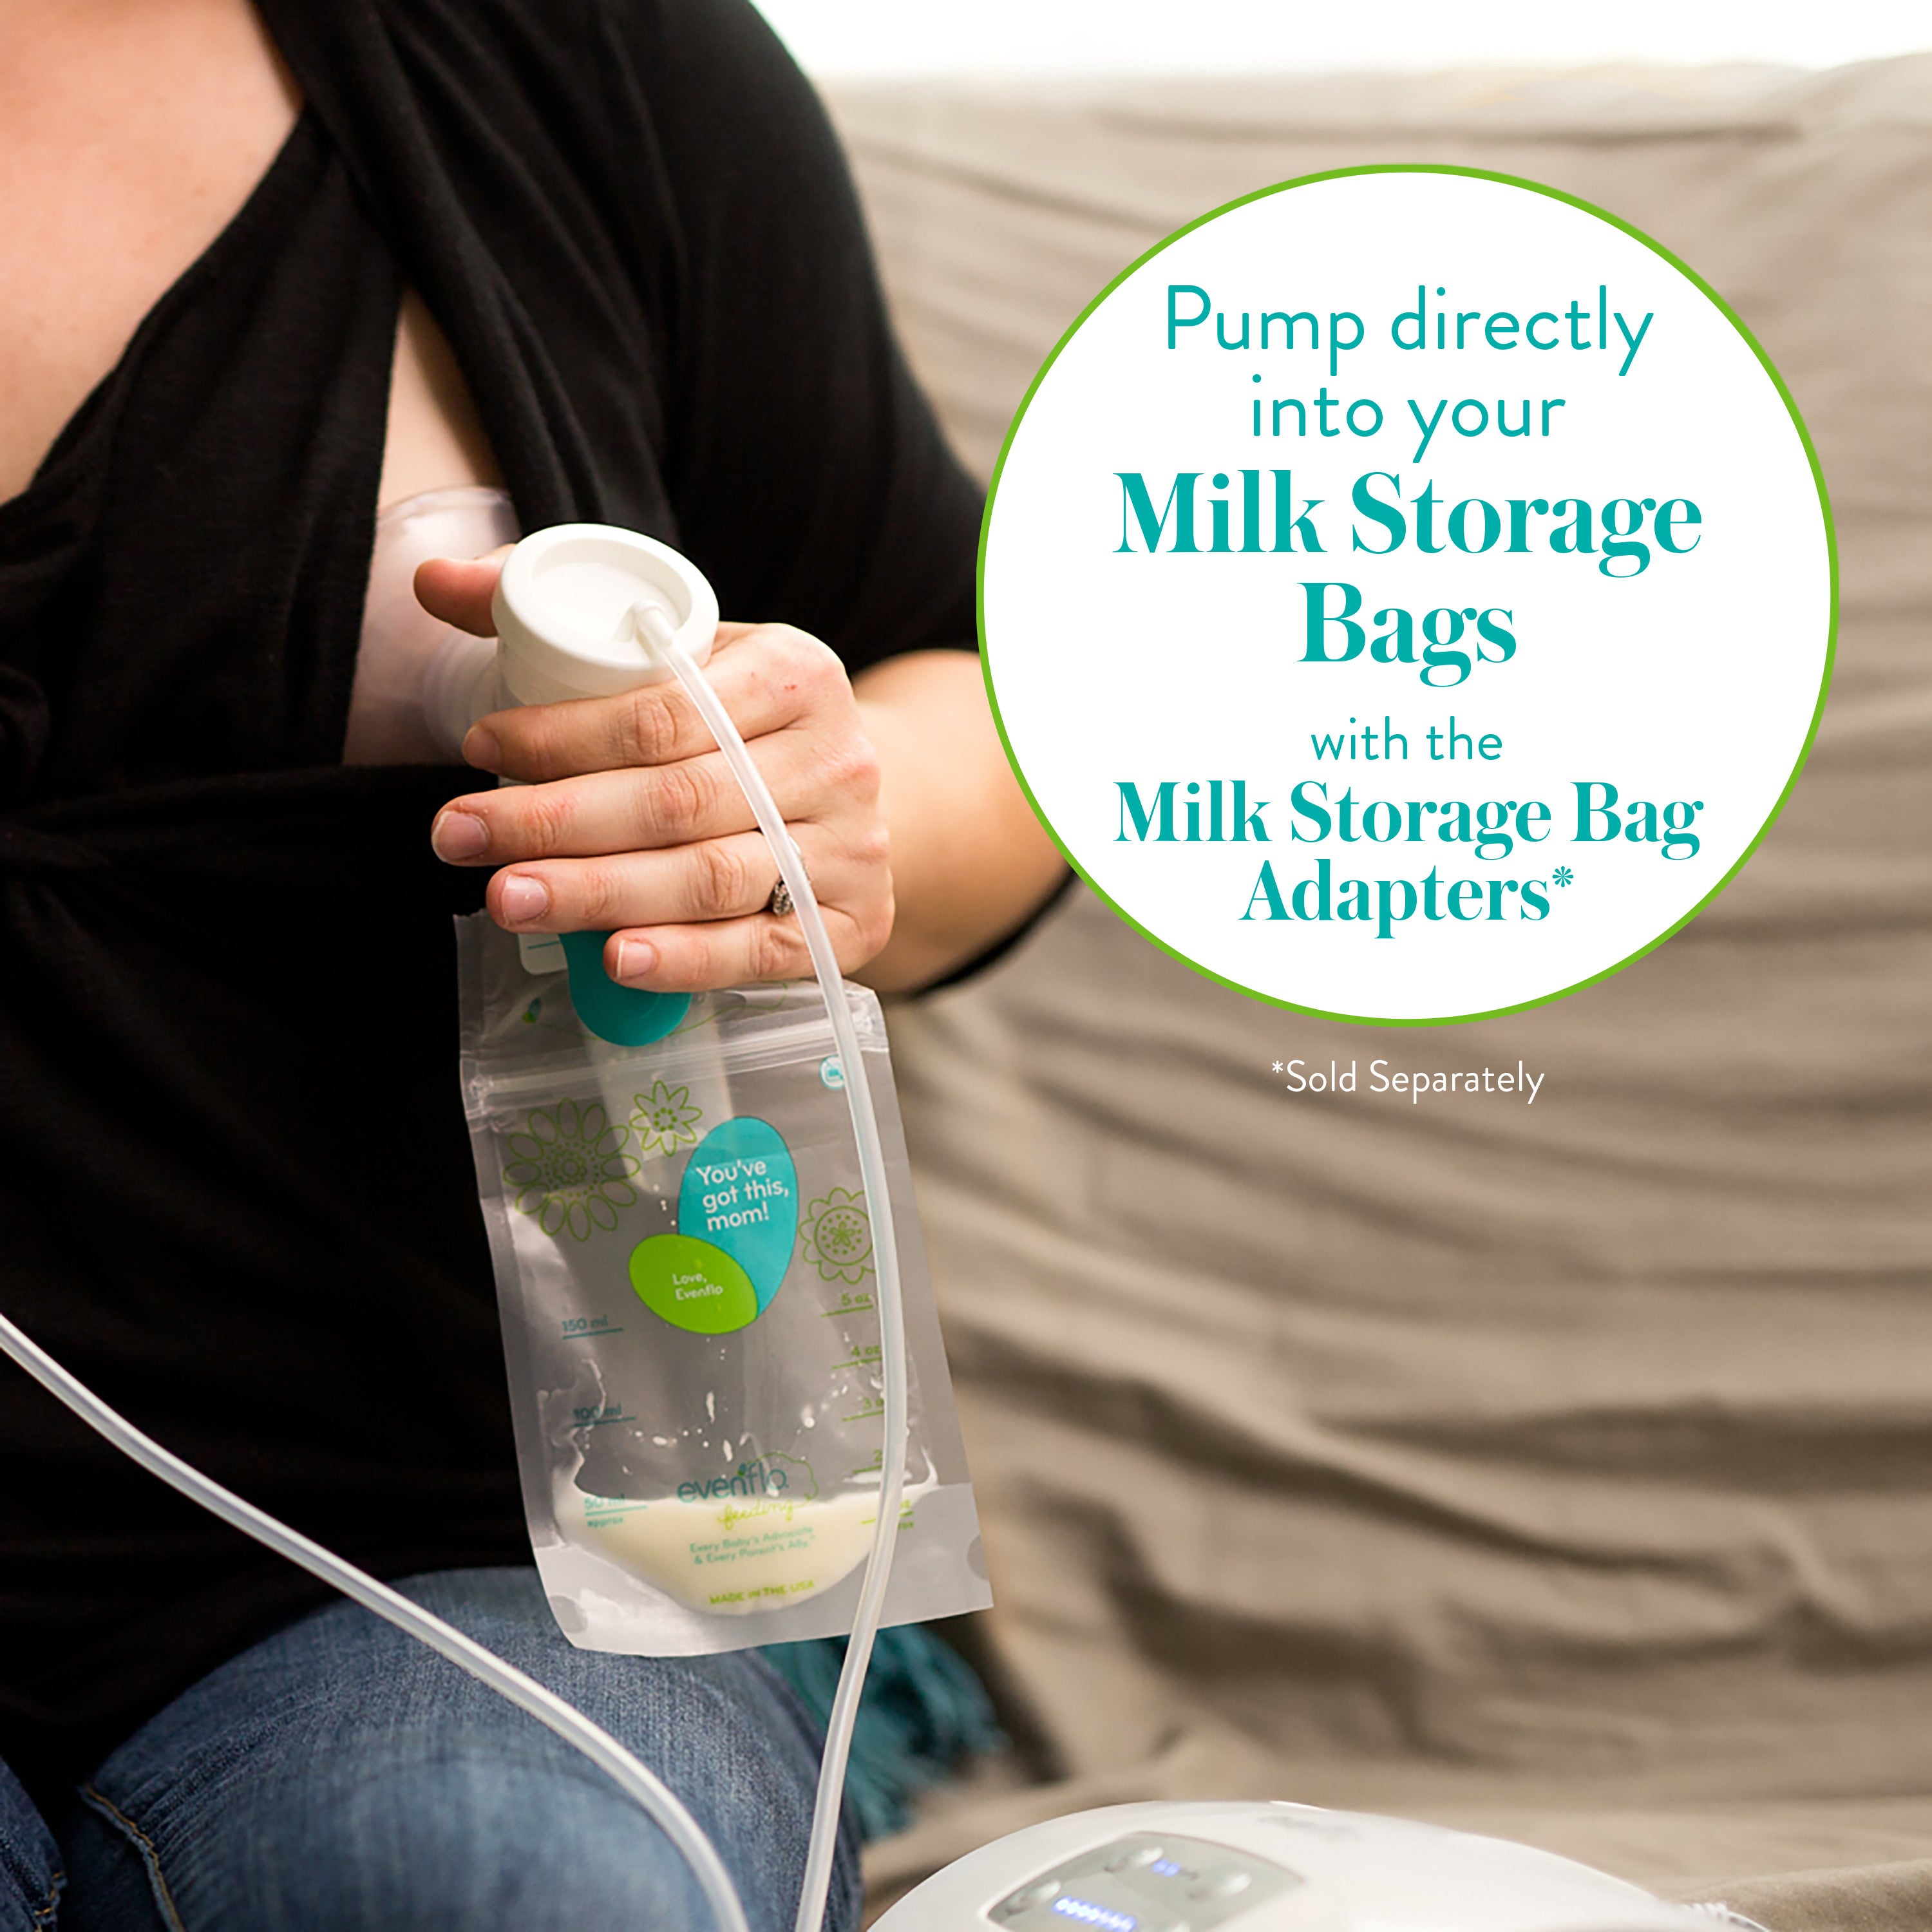 Advanced Breast Milk Storage Bags